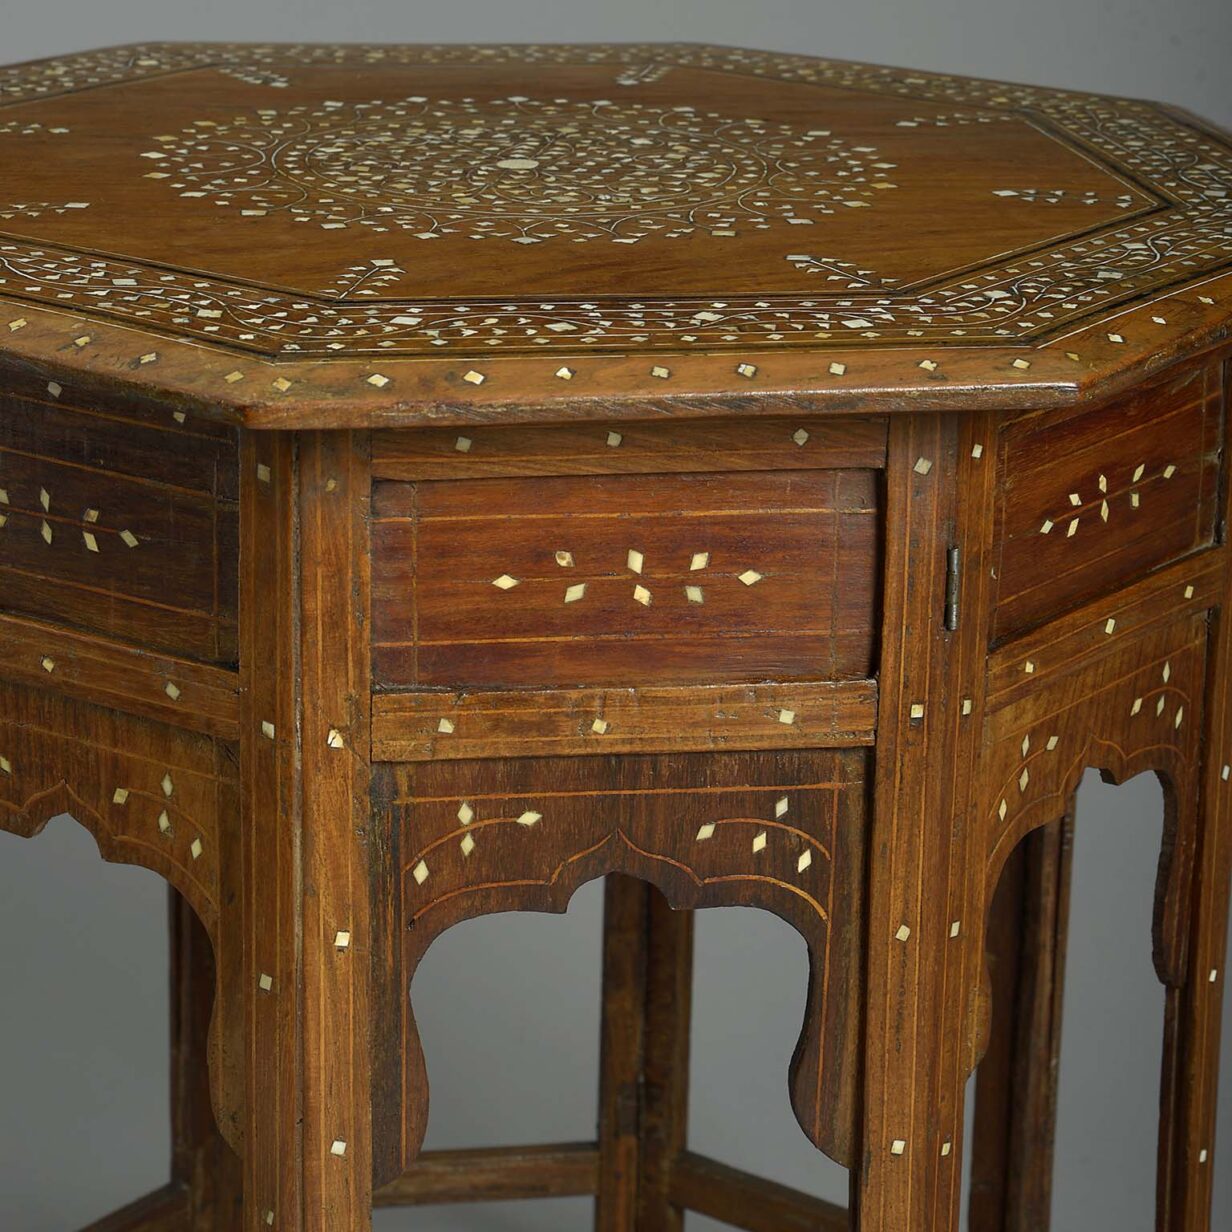 19th century hoshiarpur inlaid octagonal low table